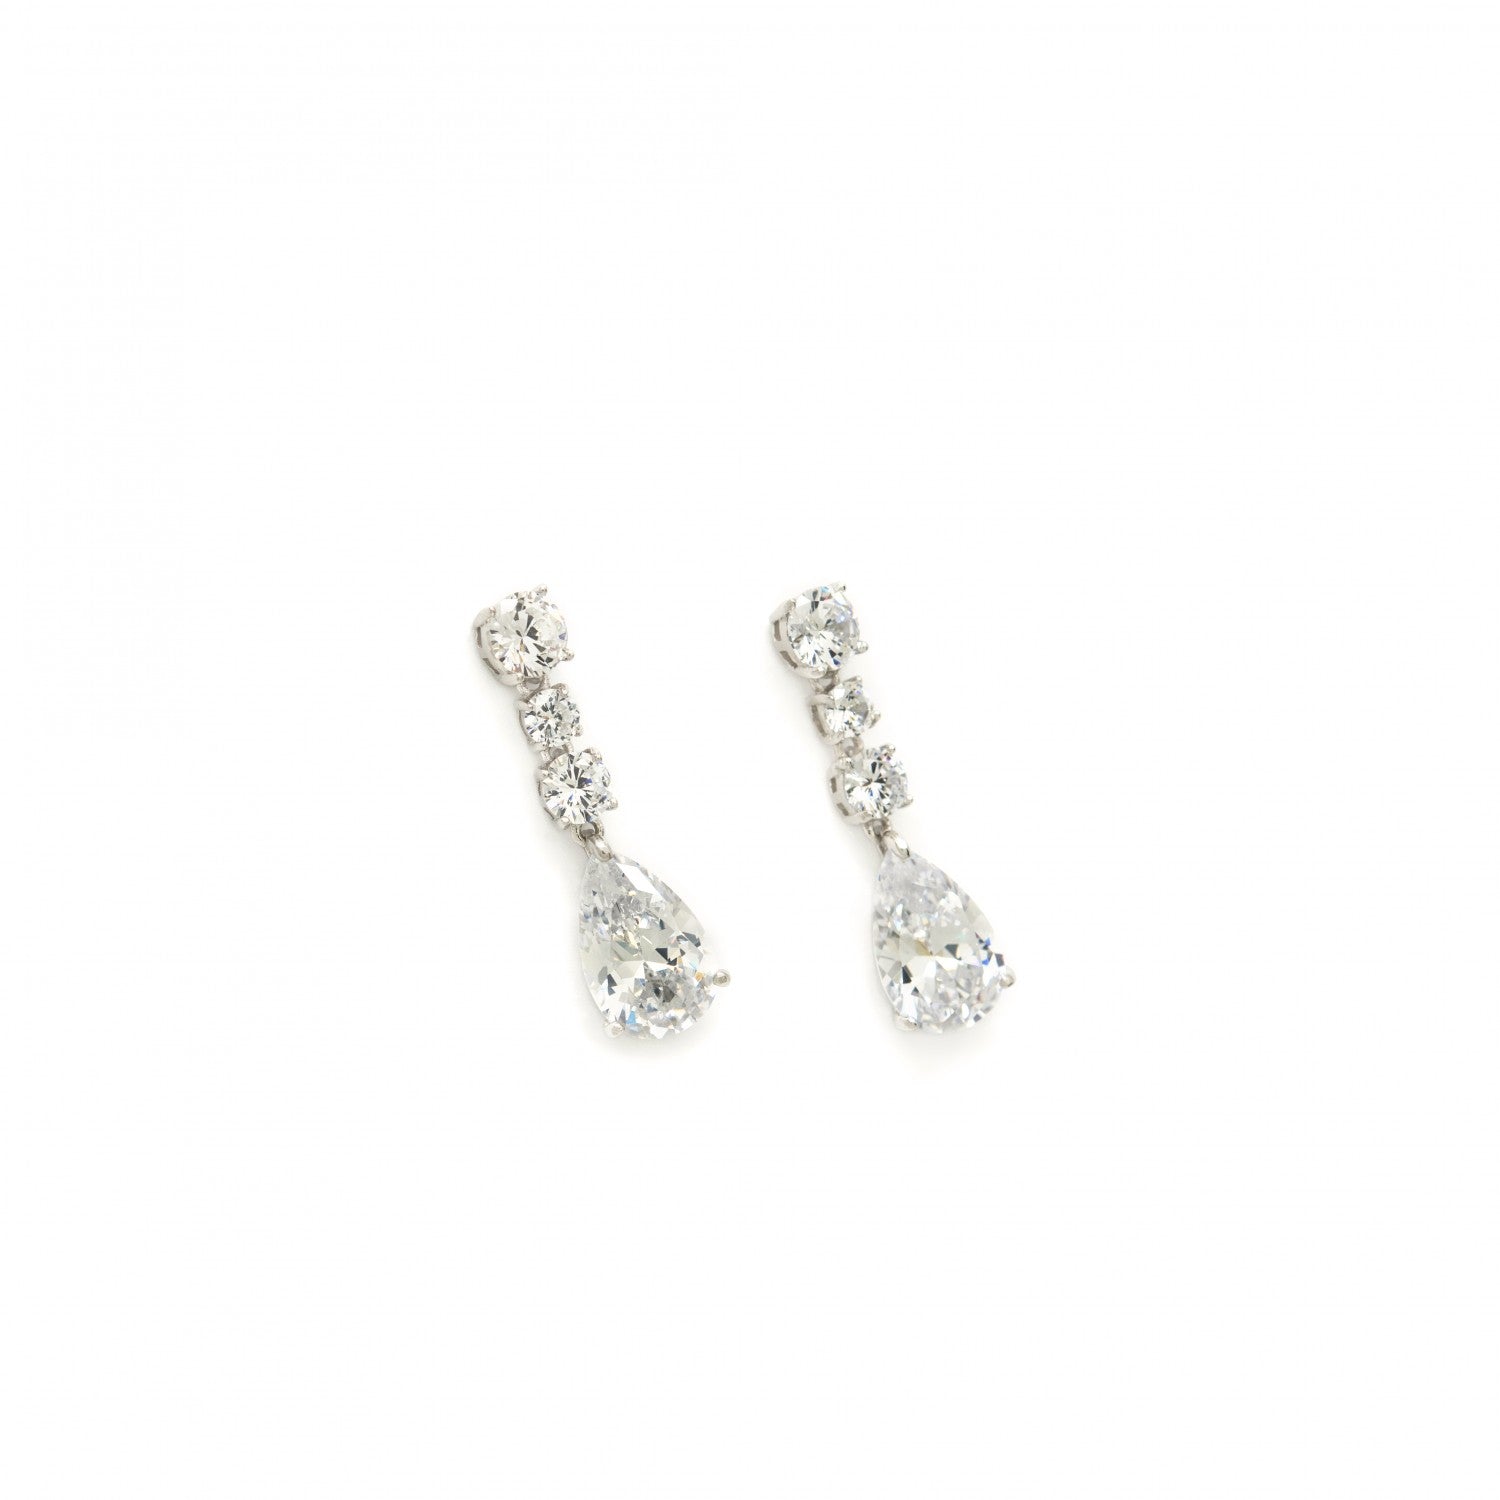 Festive and elegant small silver wedding earrings